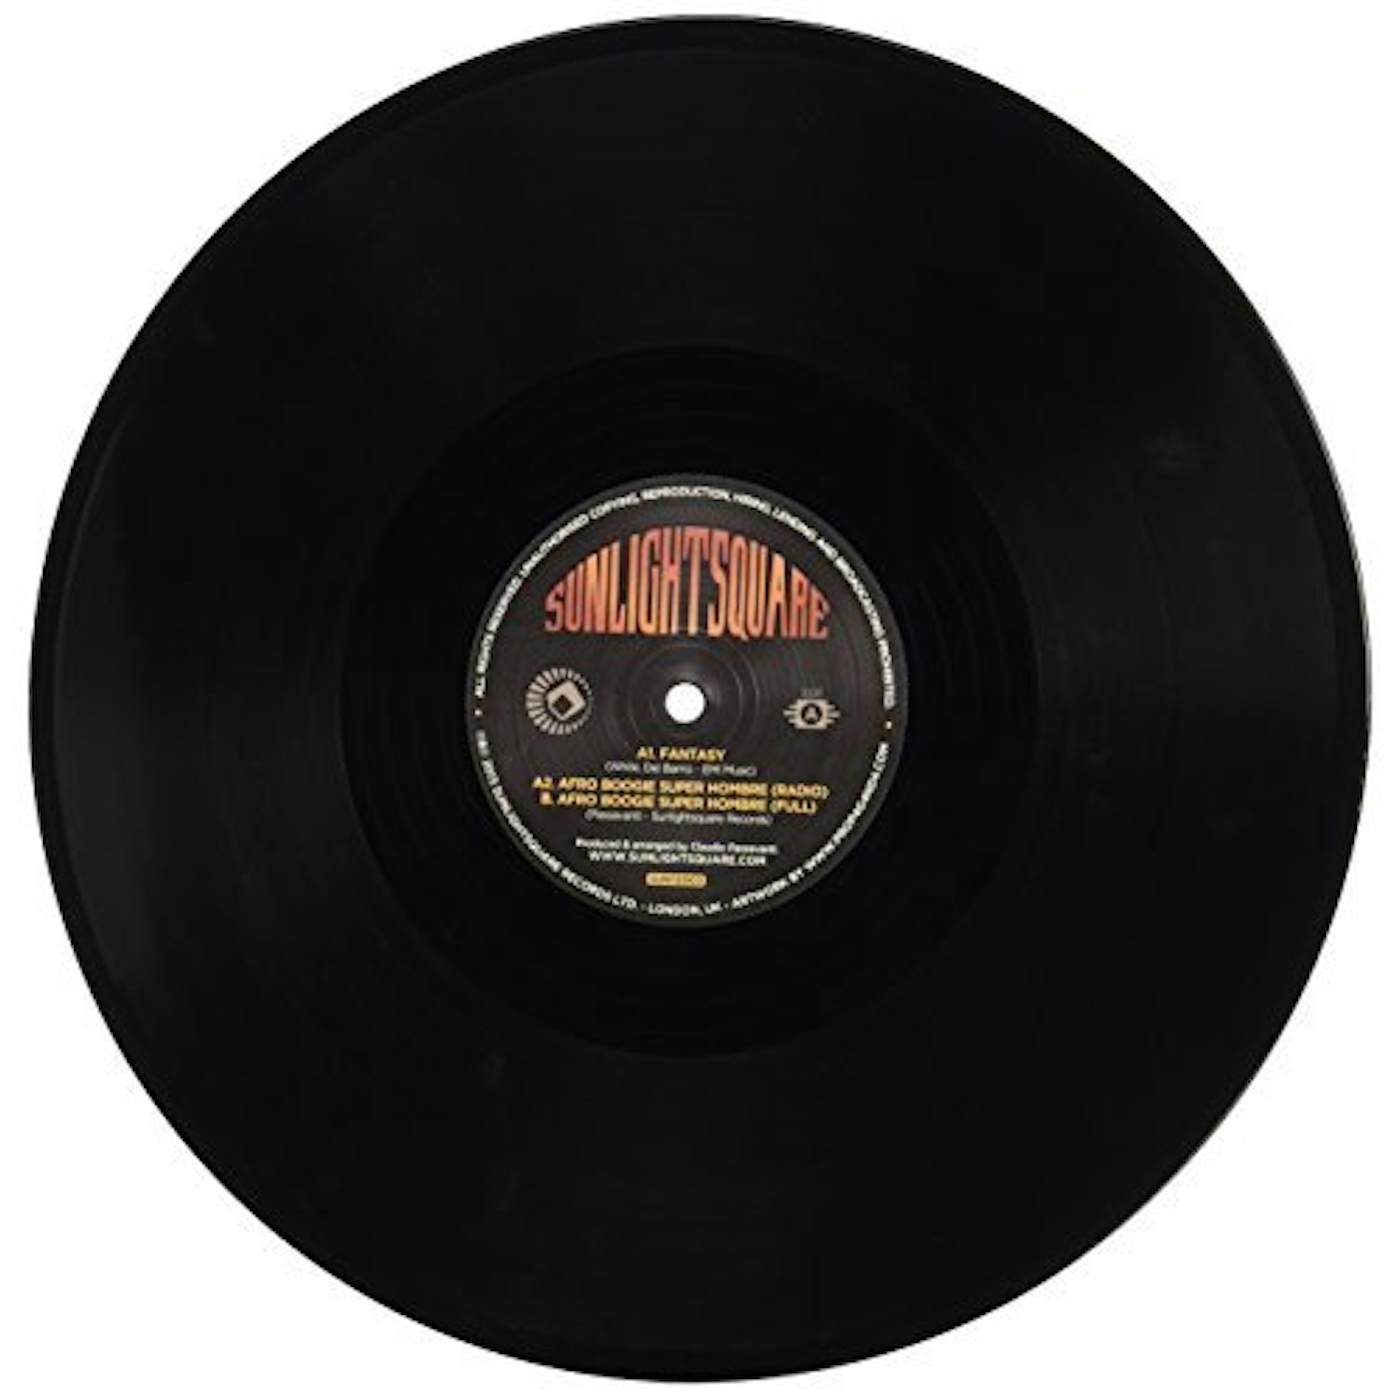 Sunlightsquare AFRO BOOGIE SUPER HOMBRE Vinyl Record